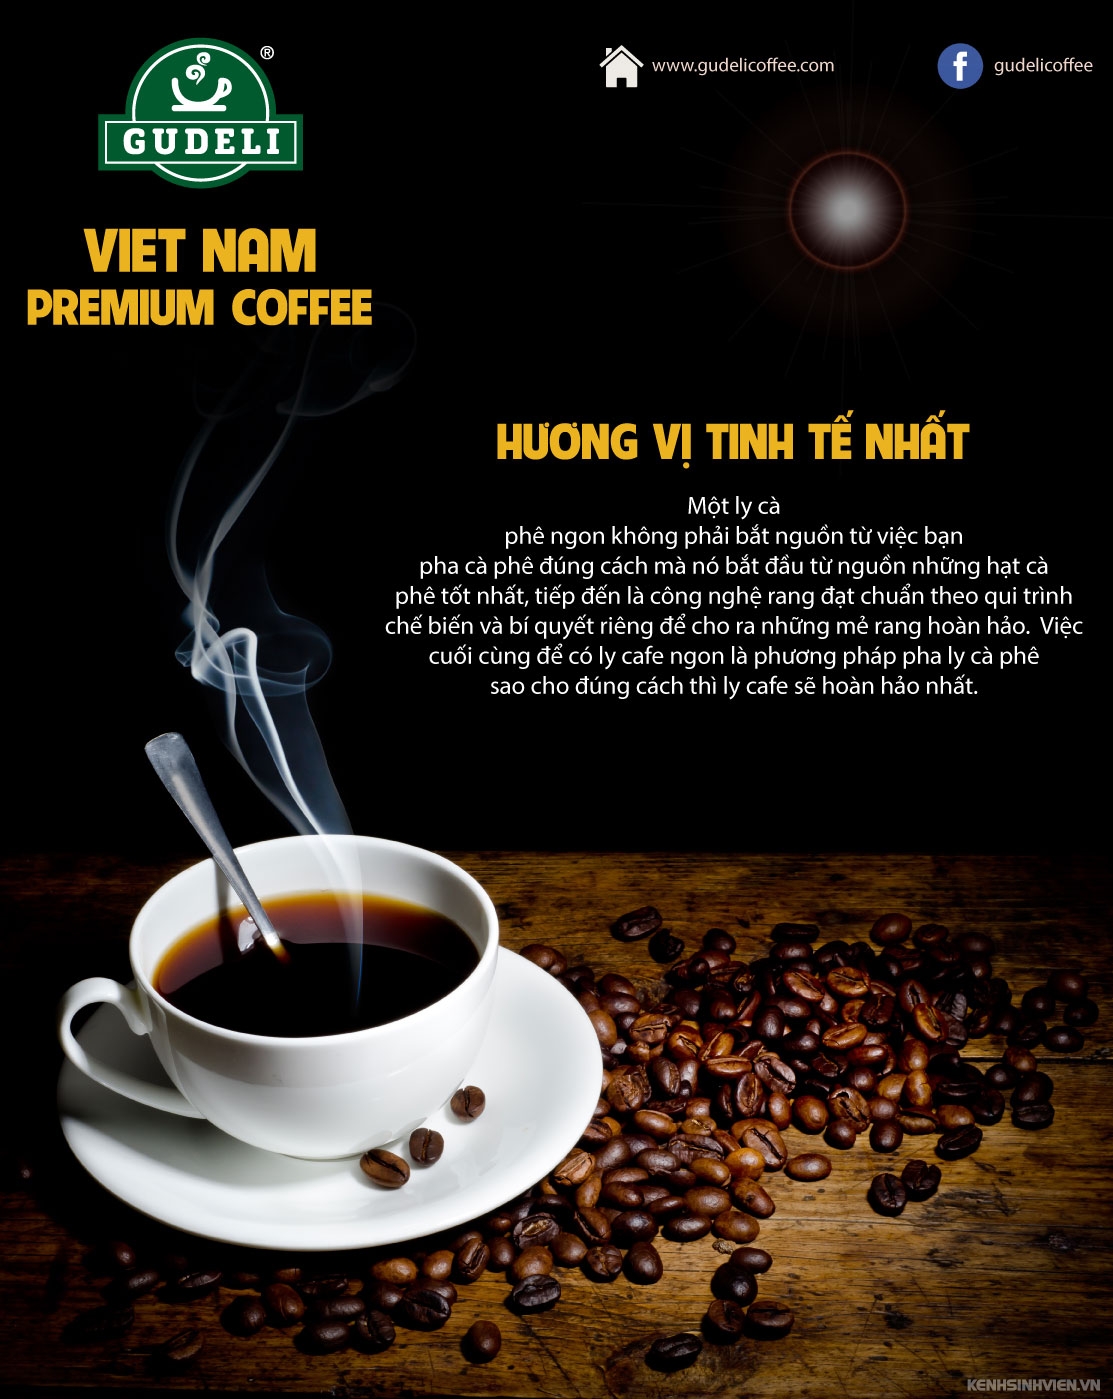 coffee-gudeli-viet-nam-premium.jpg